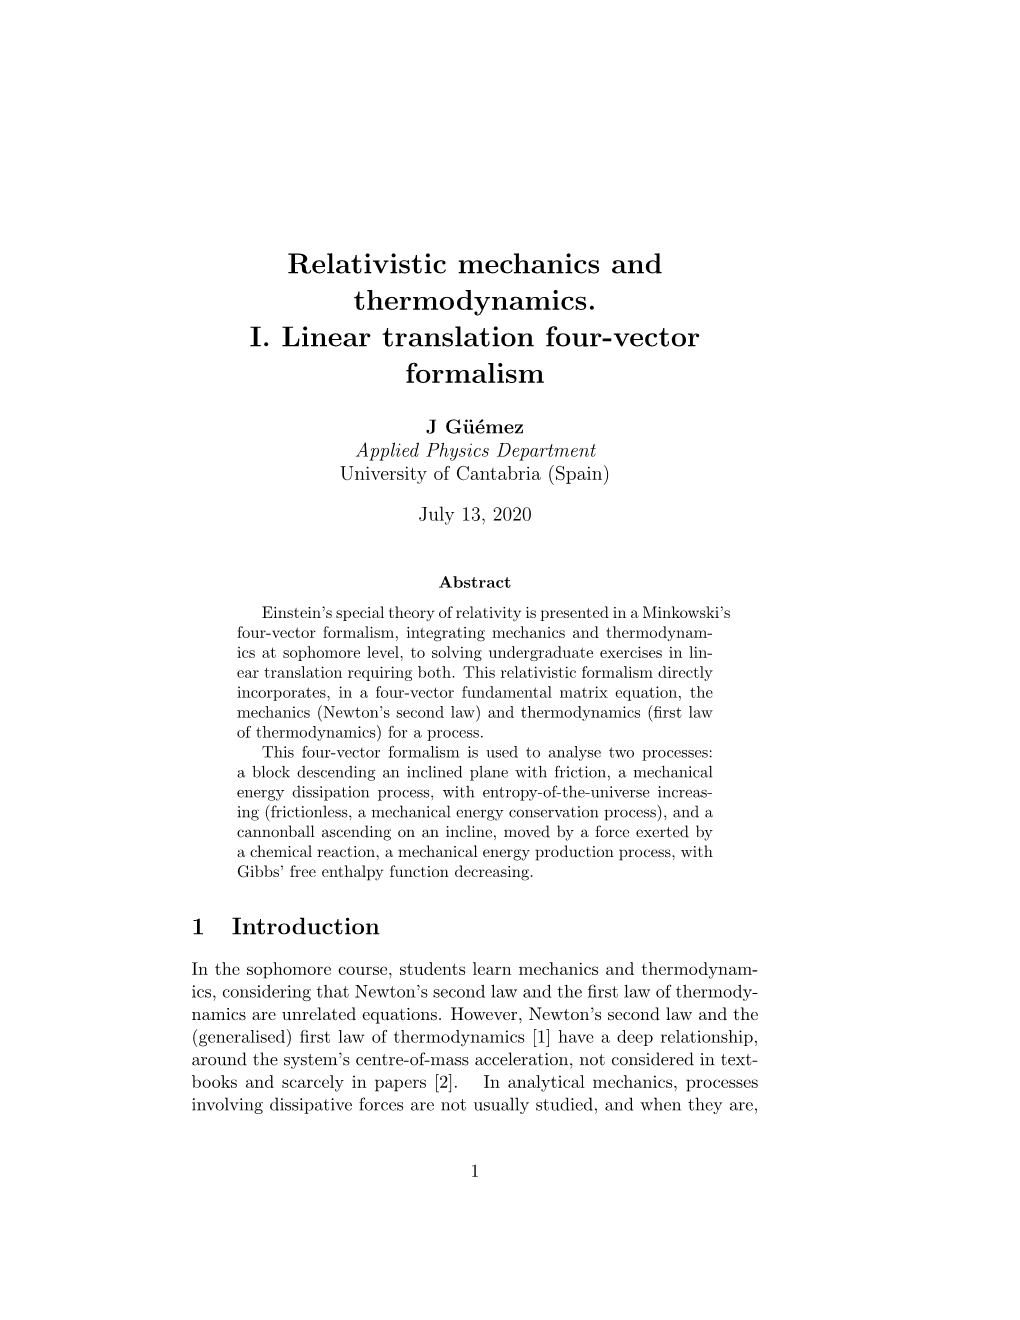 Relativistic Mechanics and Thermodynamics. I. Linear Translation Four-Vector Formalism